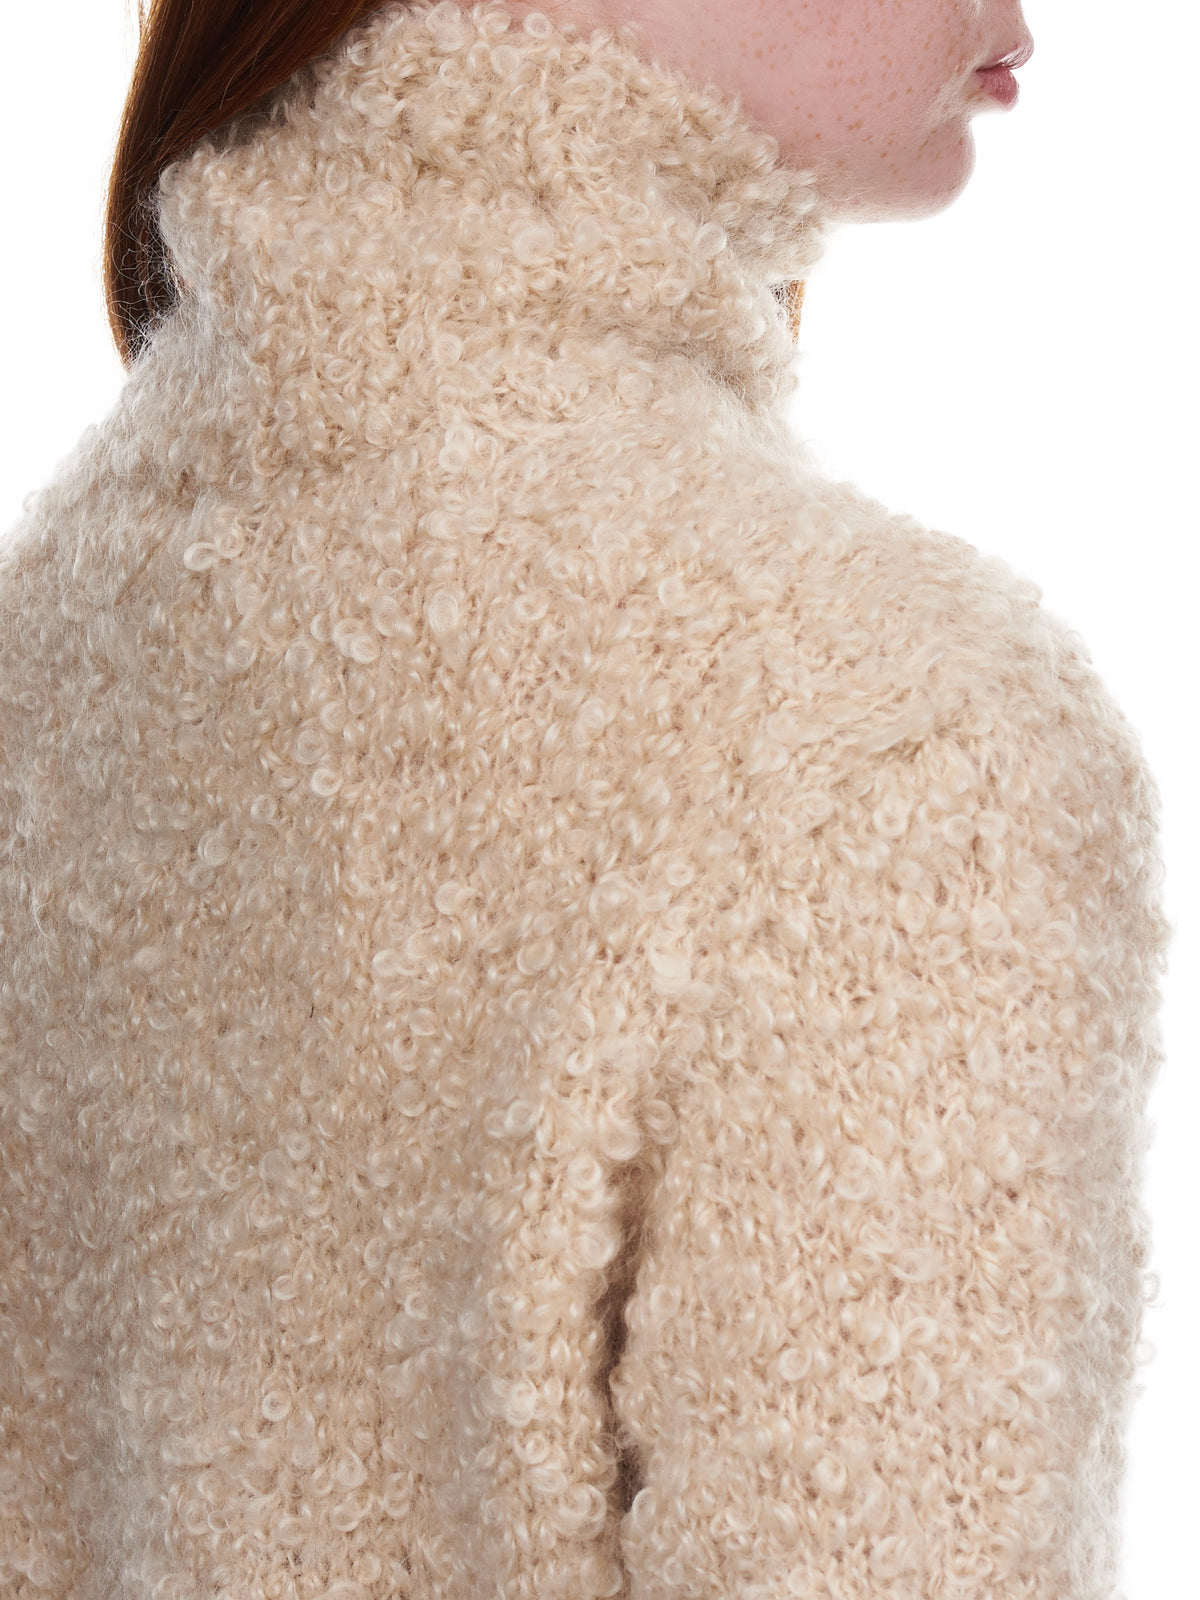 Undercover Turtleneck Sweater | H. Lorenzo - detail 